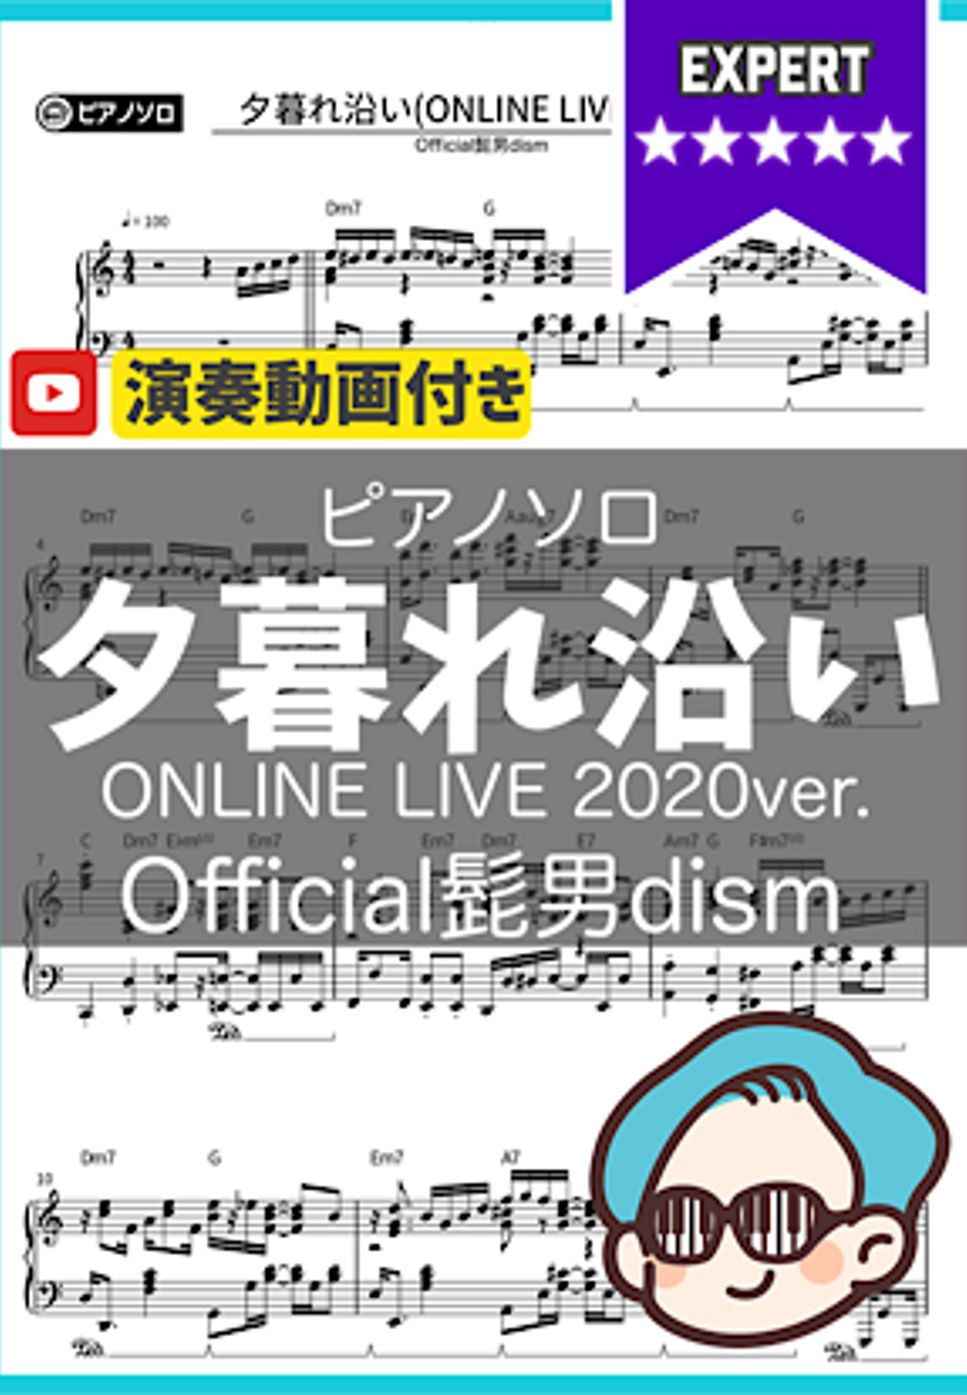 Official髭男dism - 夕暮れ沿い(ONLINE LIVE 2020) by シータピアノ